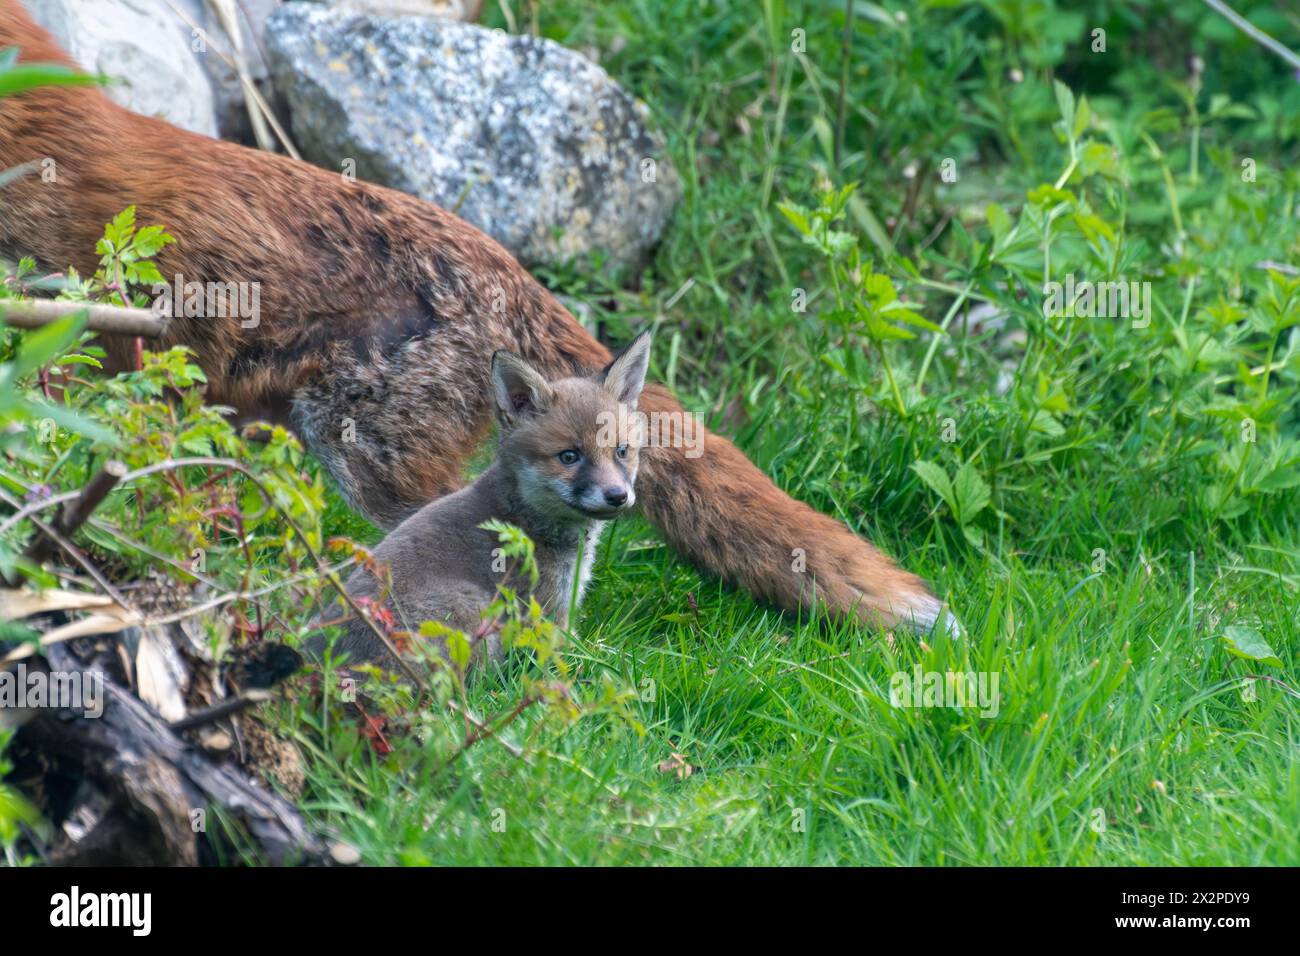 Fox cub (Vulpes vulpes) sitting next to its mother, garden wildlife, England, UK Stock Photo